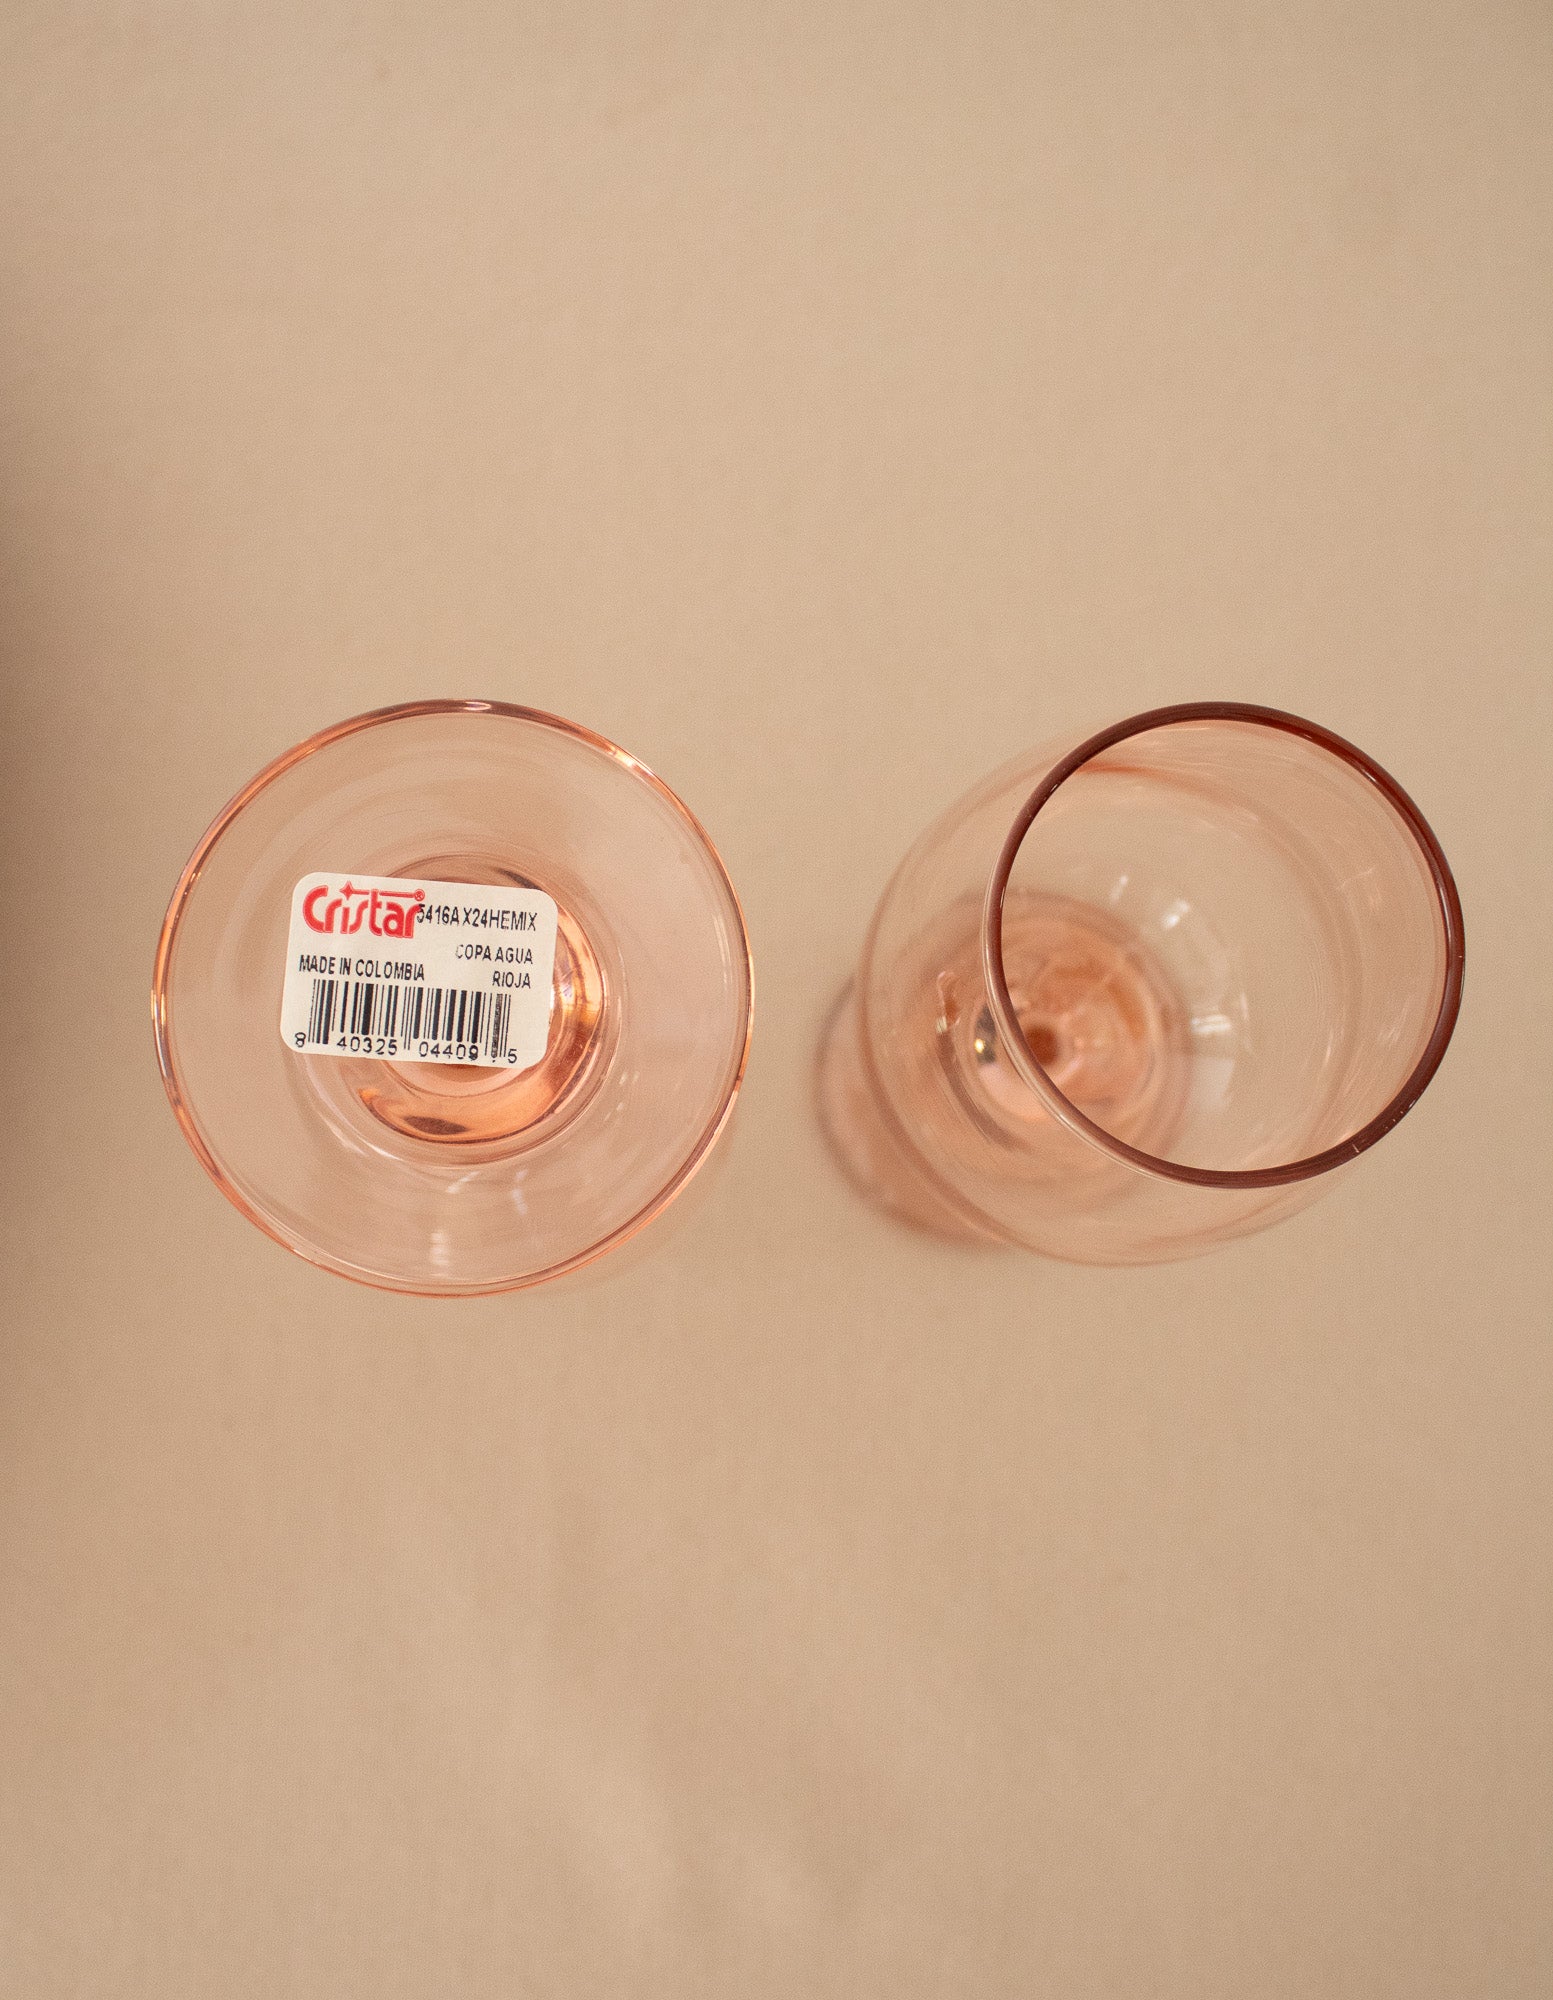 Deadstock Cristar Wine Glasses, Set of 2